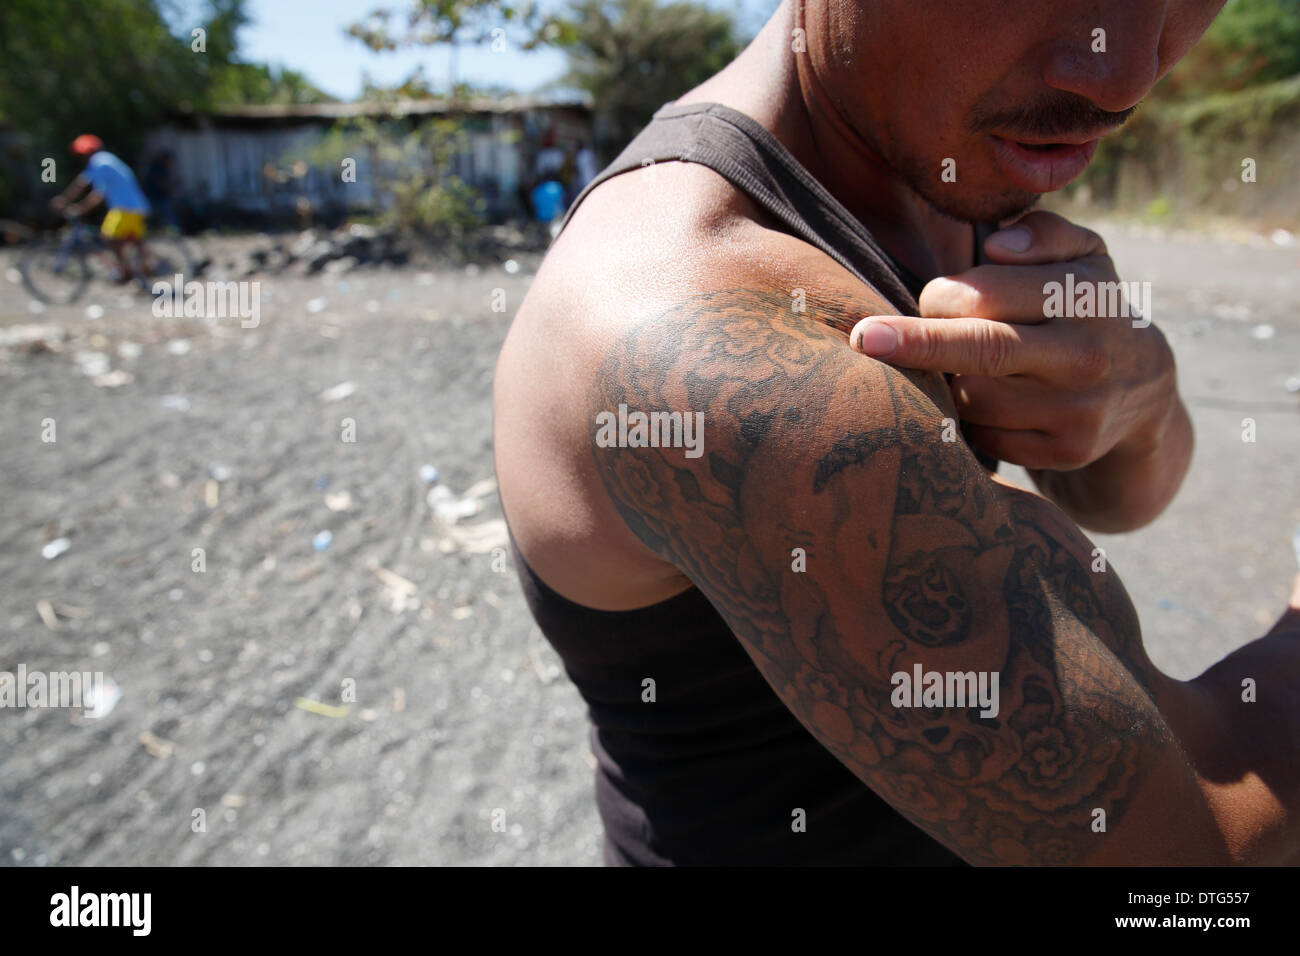 Man showing tattoos, Potosi Nicaragua Stock Photo